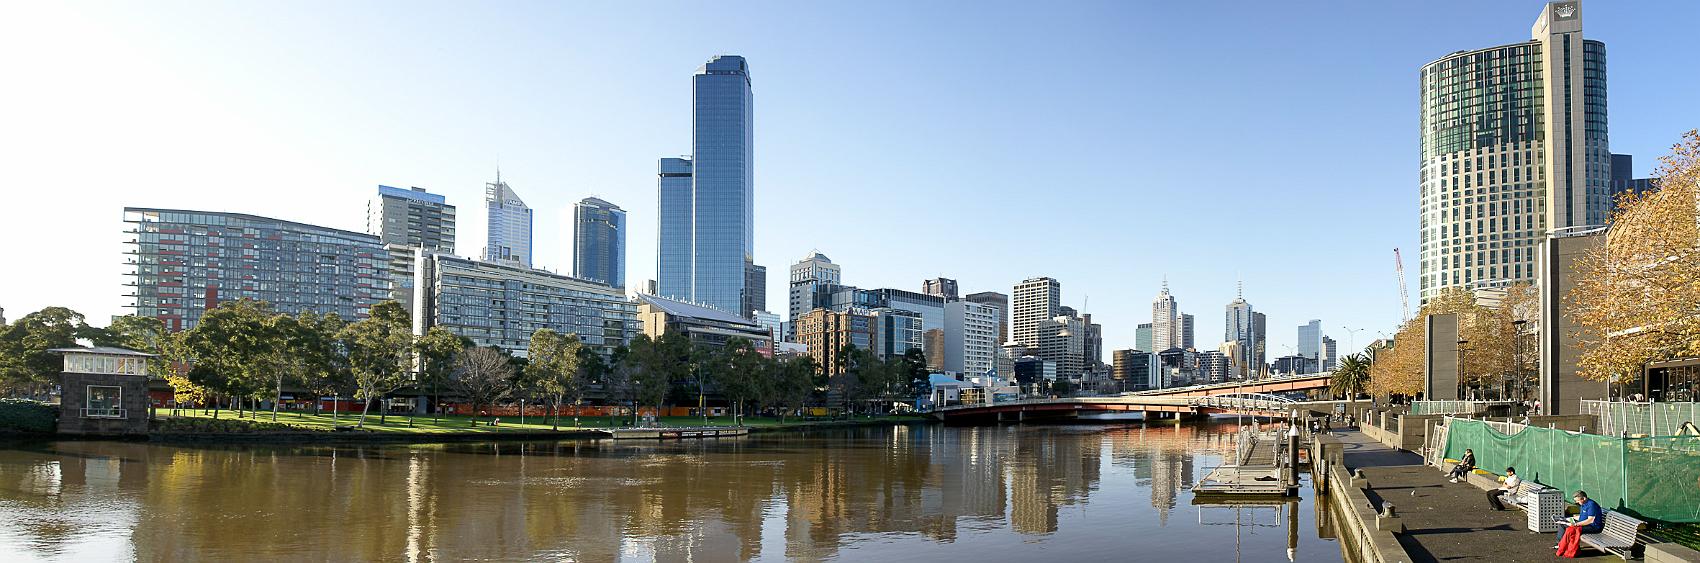 20110629-Melbourne-Panorama-1.JPEG